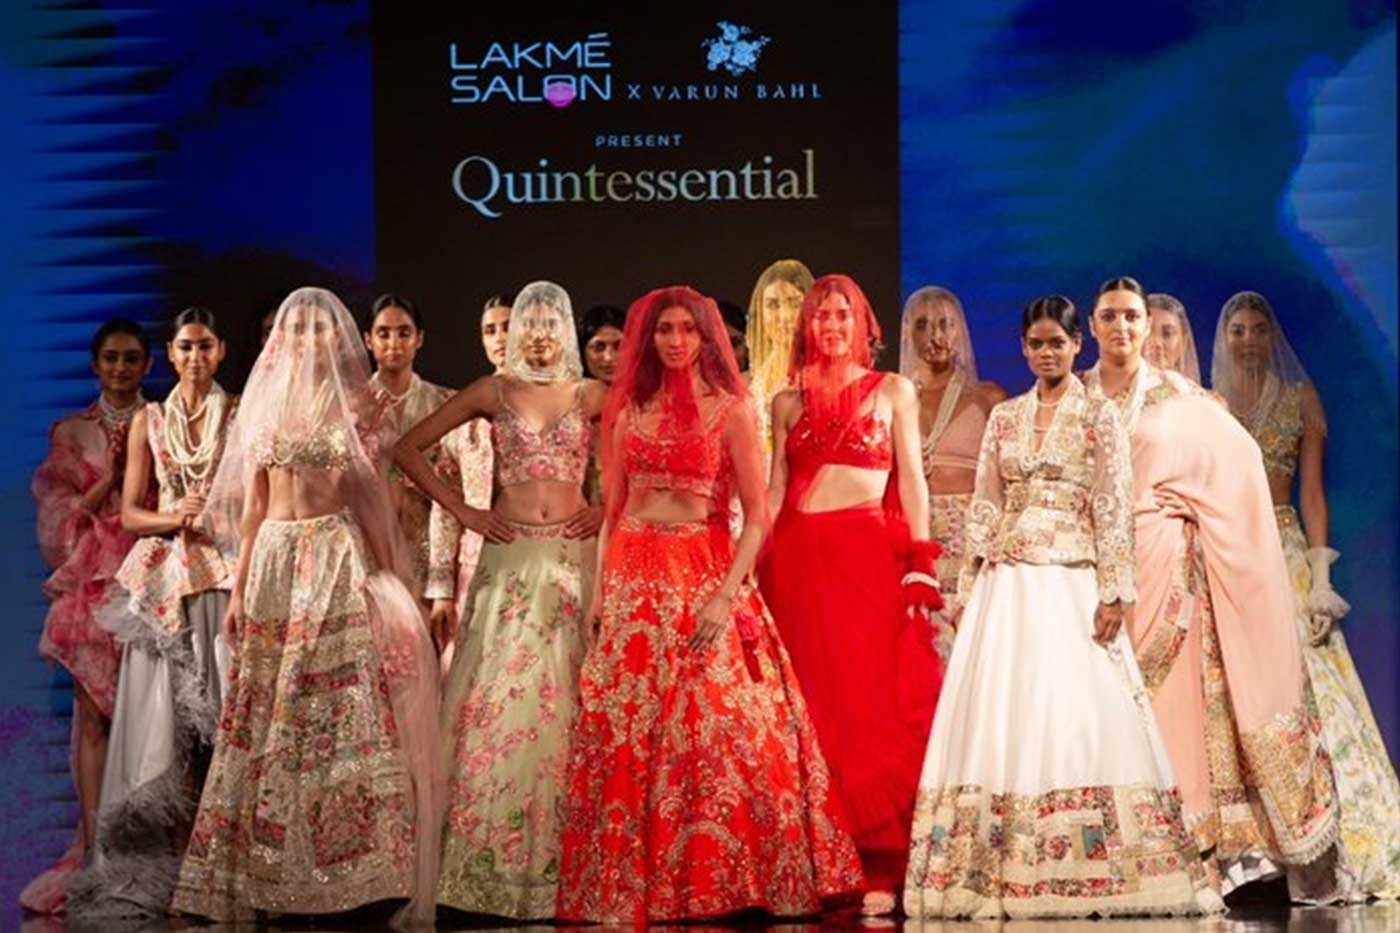 Lakme Salon x Varun Bahl showcased ‘Quintessential’ at Lakme Fashion Week 2022